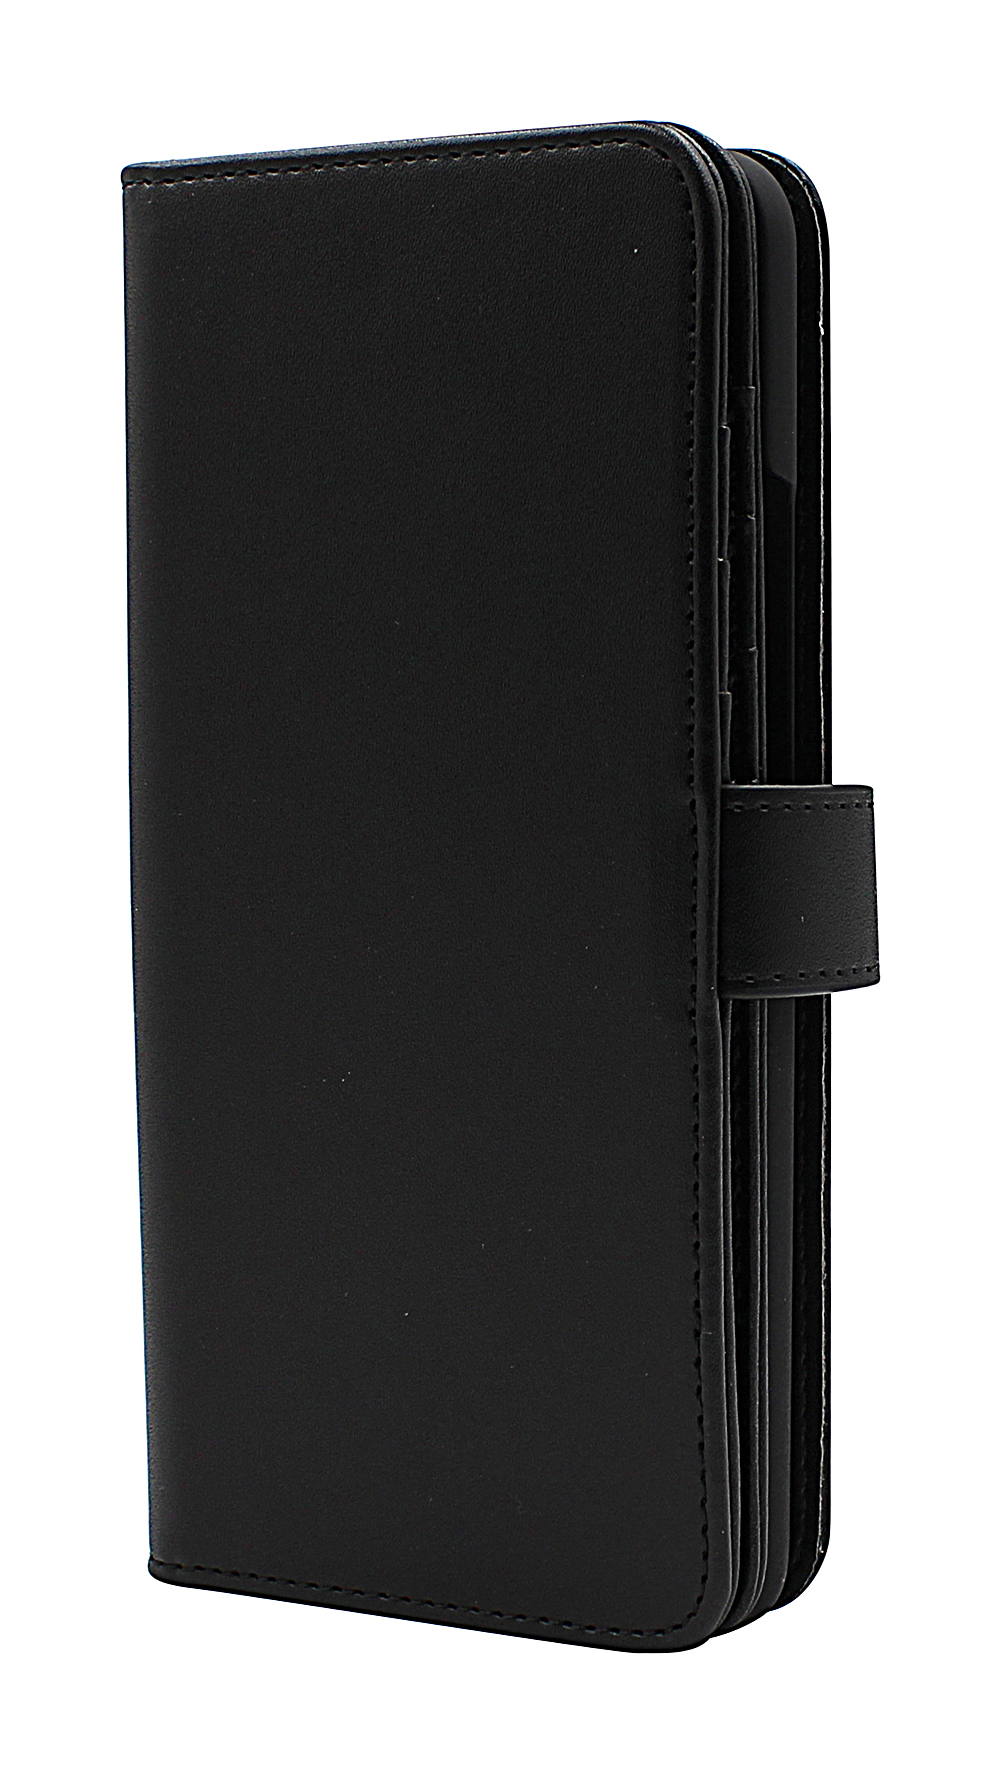 CoverIn Skimblocker XL Wallet Motorola Moto G9 Power